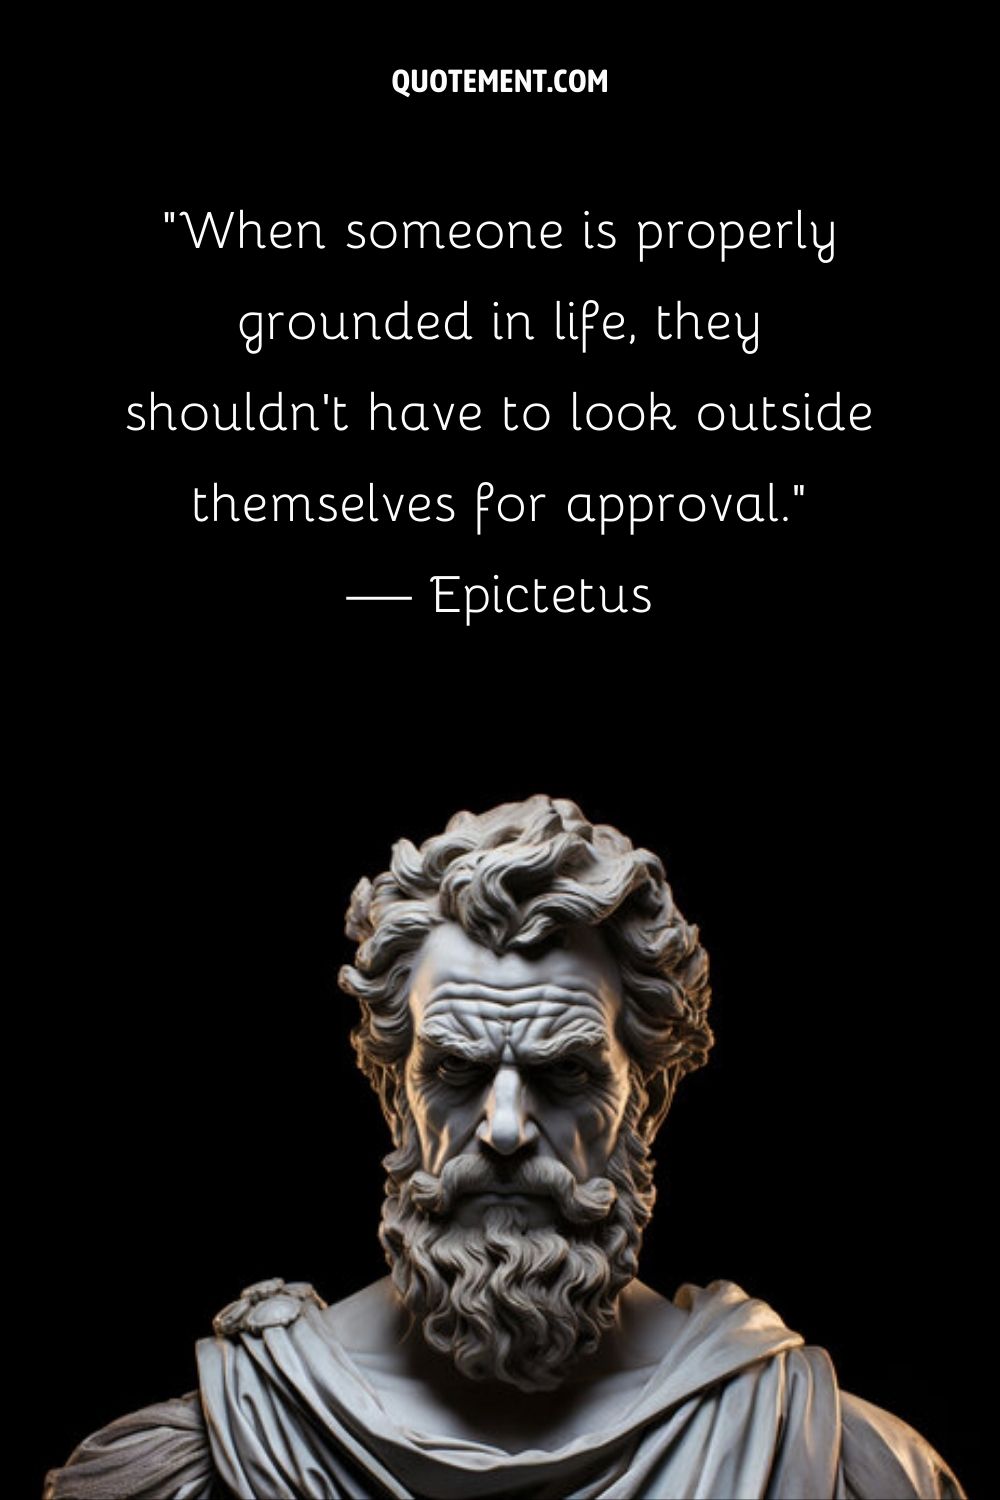 Epictetus' wisdom narrated through enduring marble artistry.